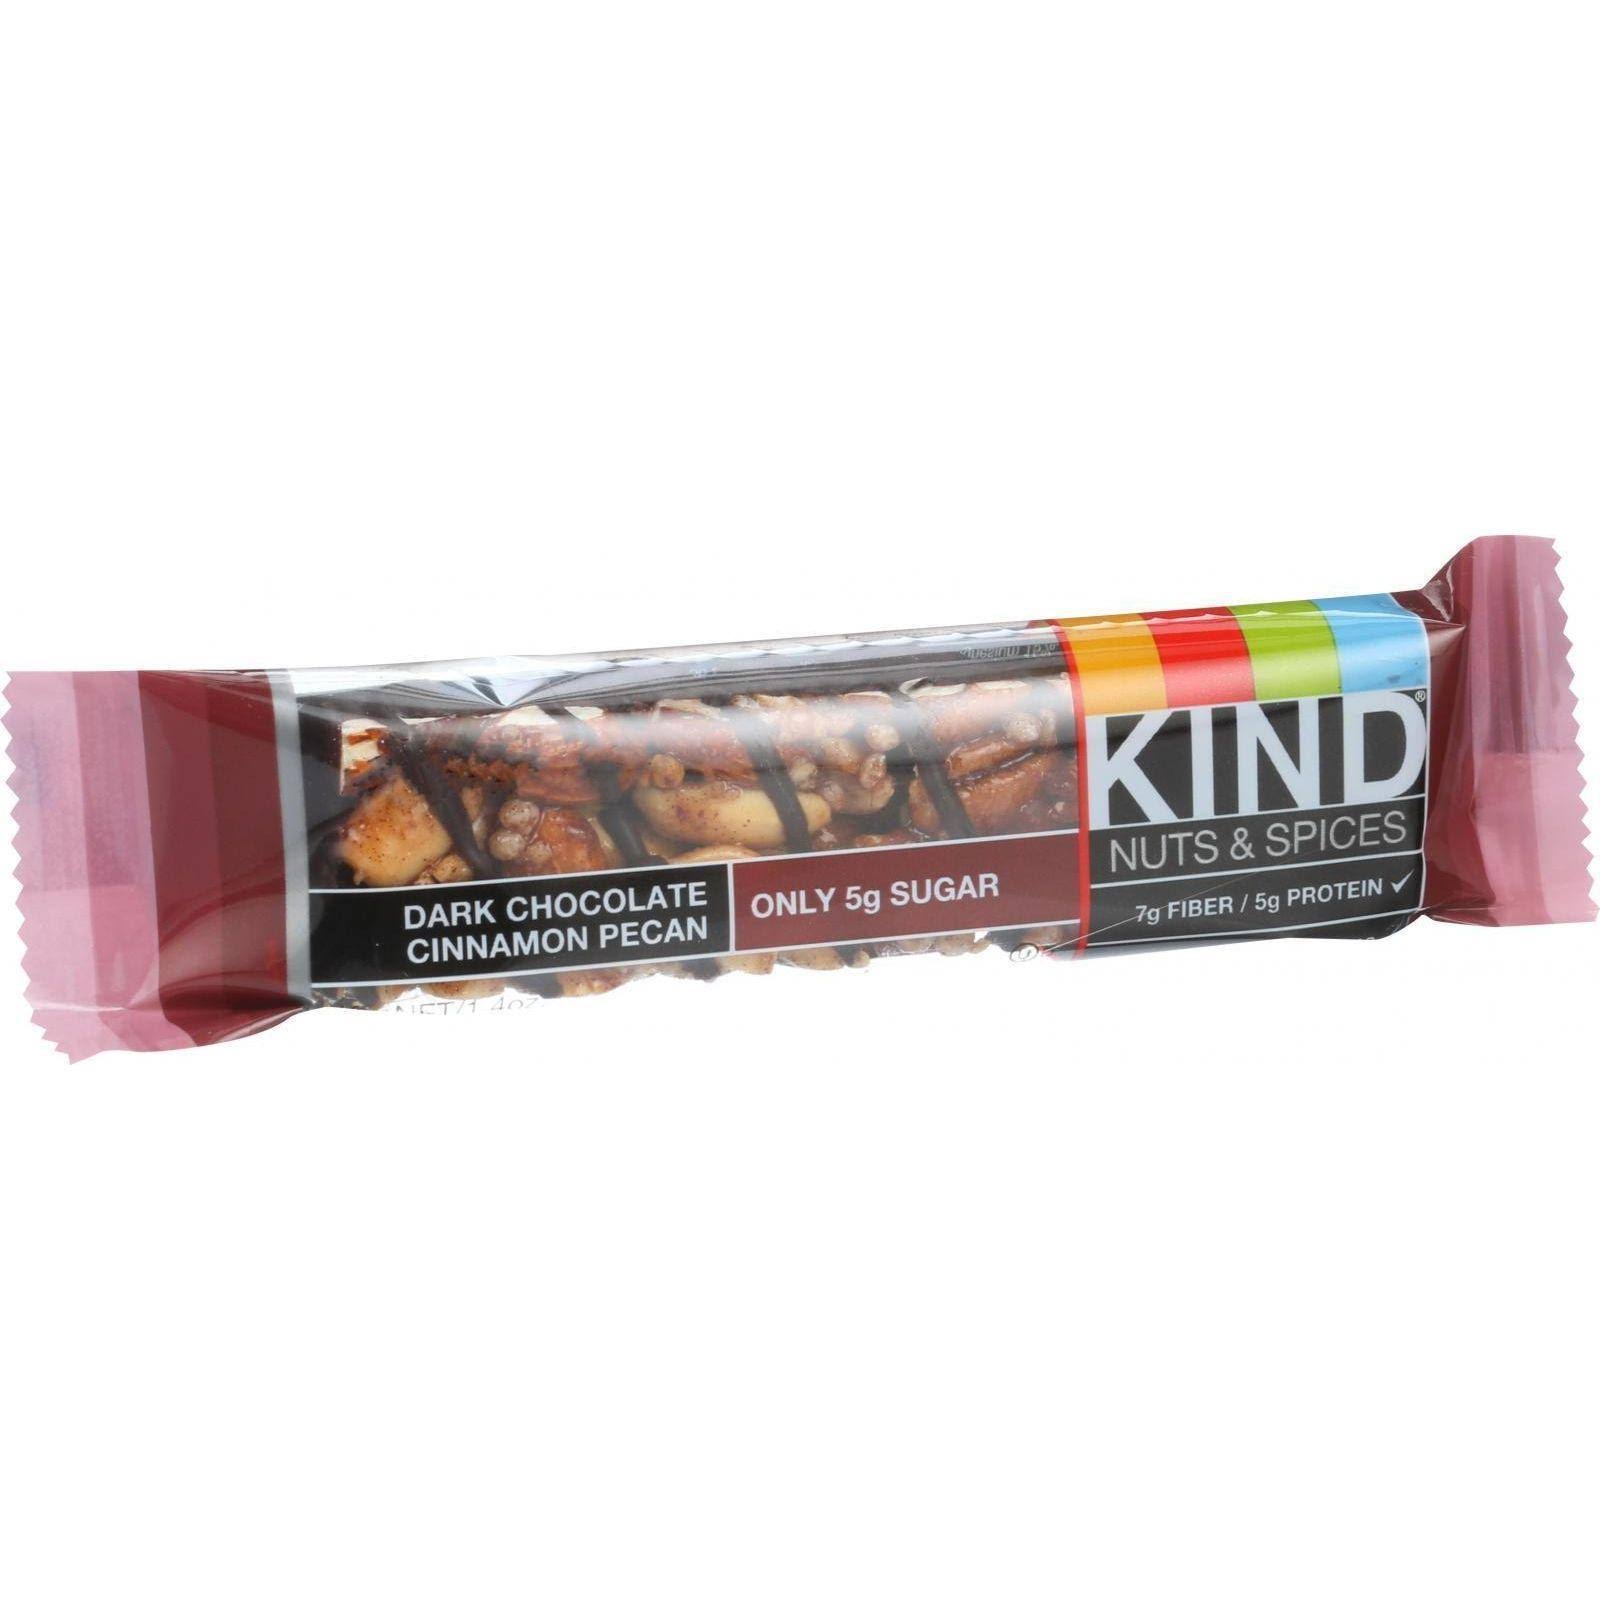 Kind Nuts & Spices Dark Chocolate Cinnamon Pecan Bar - 12 Pack